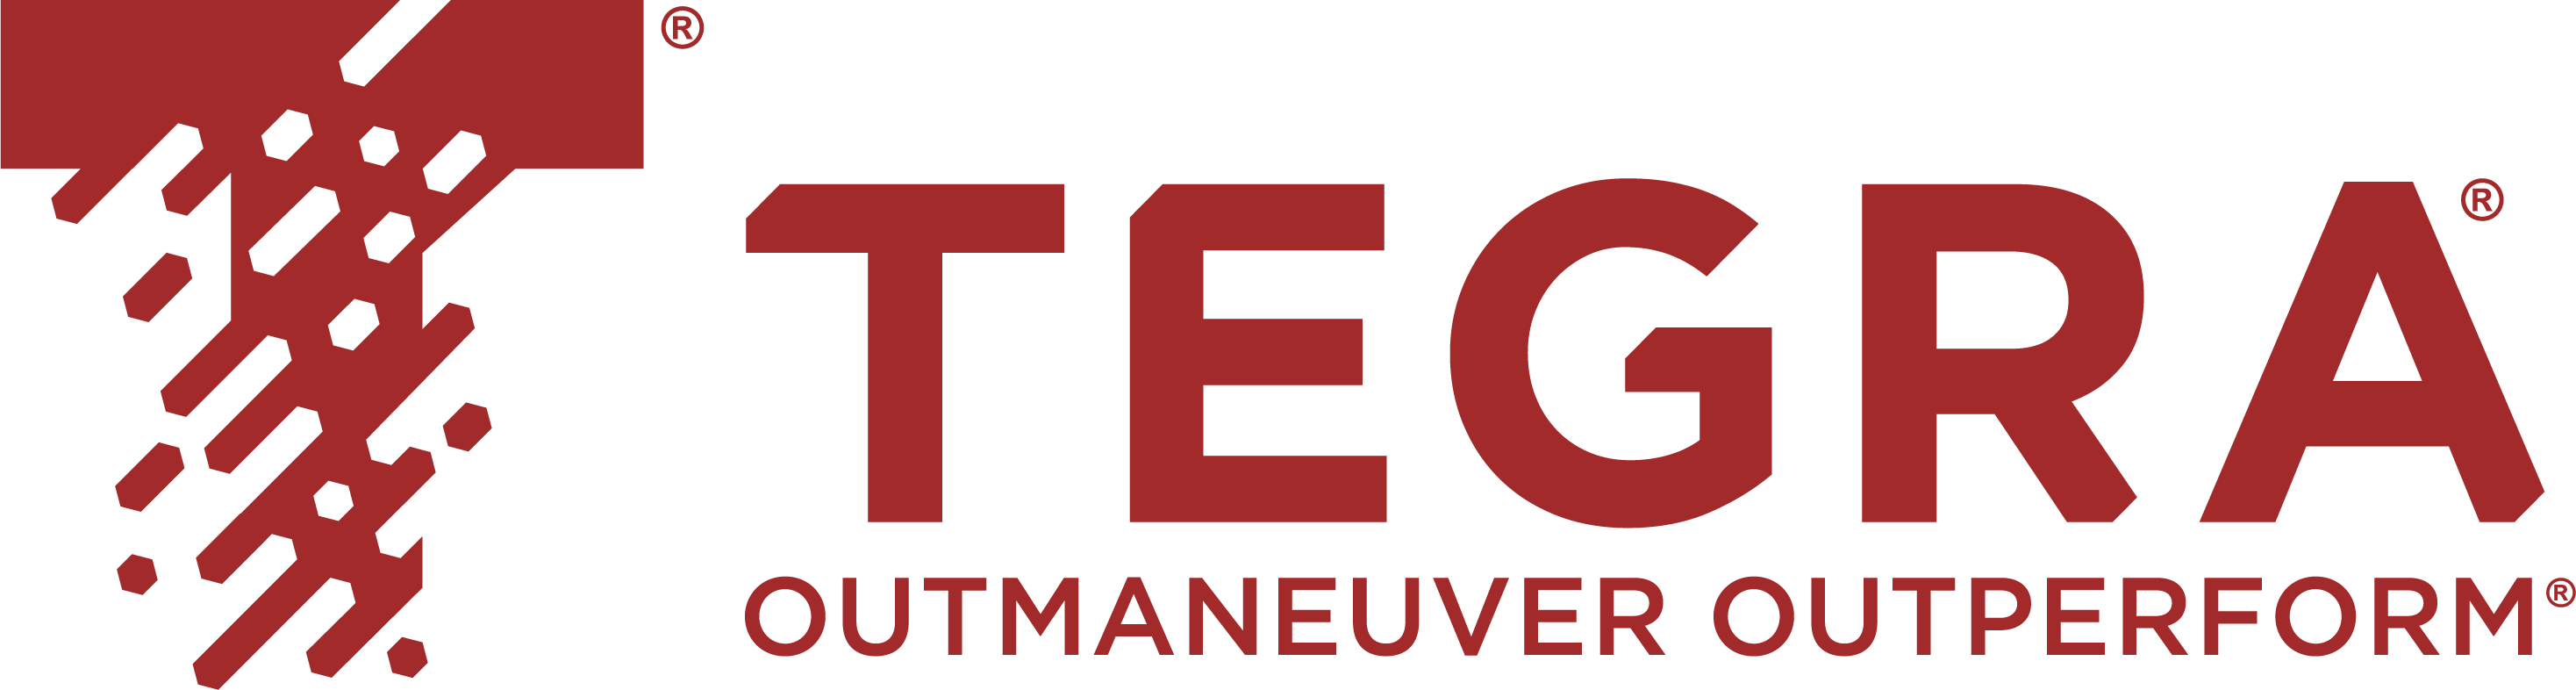 Tegra logo